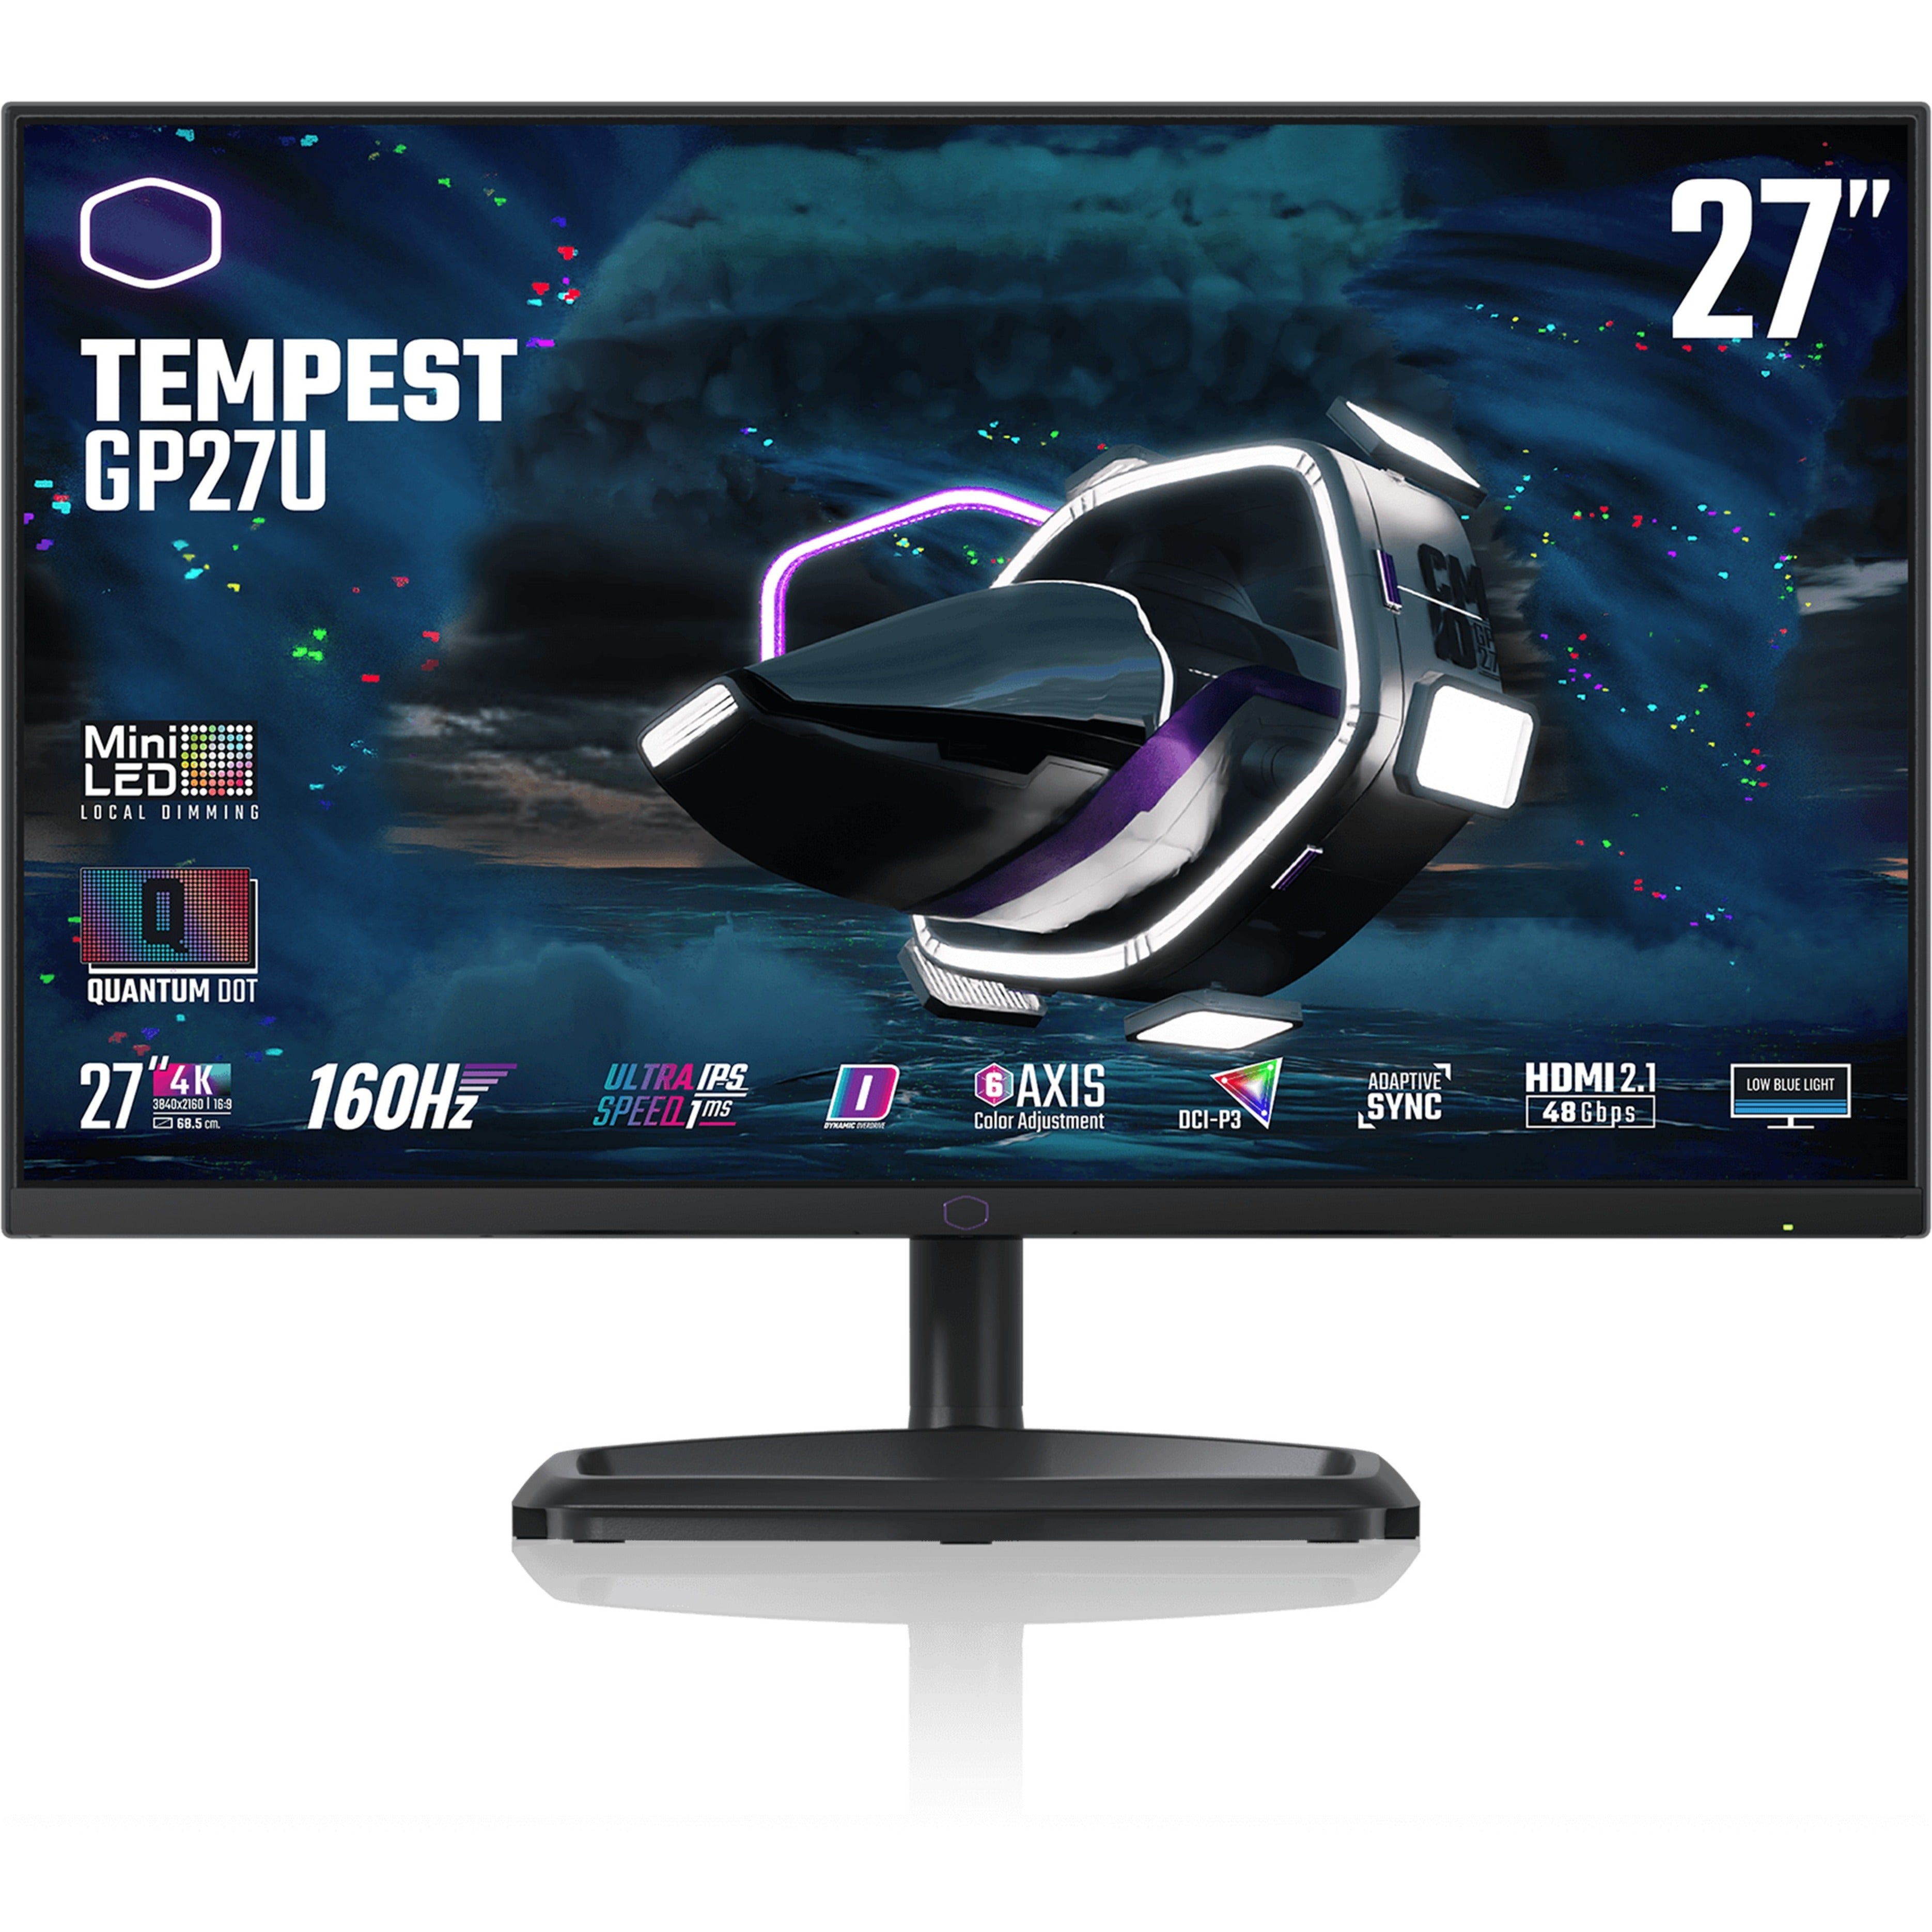 Cooler Master CMI-GP27-FUS-US Tempest GP27-FUS Widescreen Gaming LCD Monitor, 4K UHD, Quantum Mini LED, 27, FreeSync/G-Sync, 160Hz, HDR, USB Hub, KVM Switch